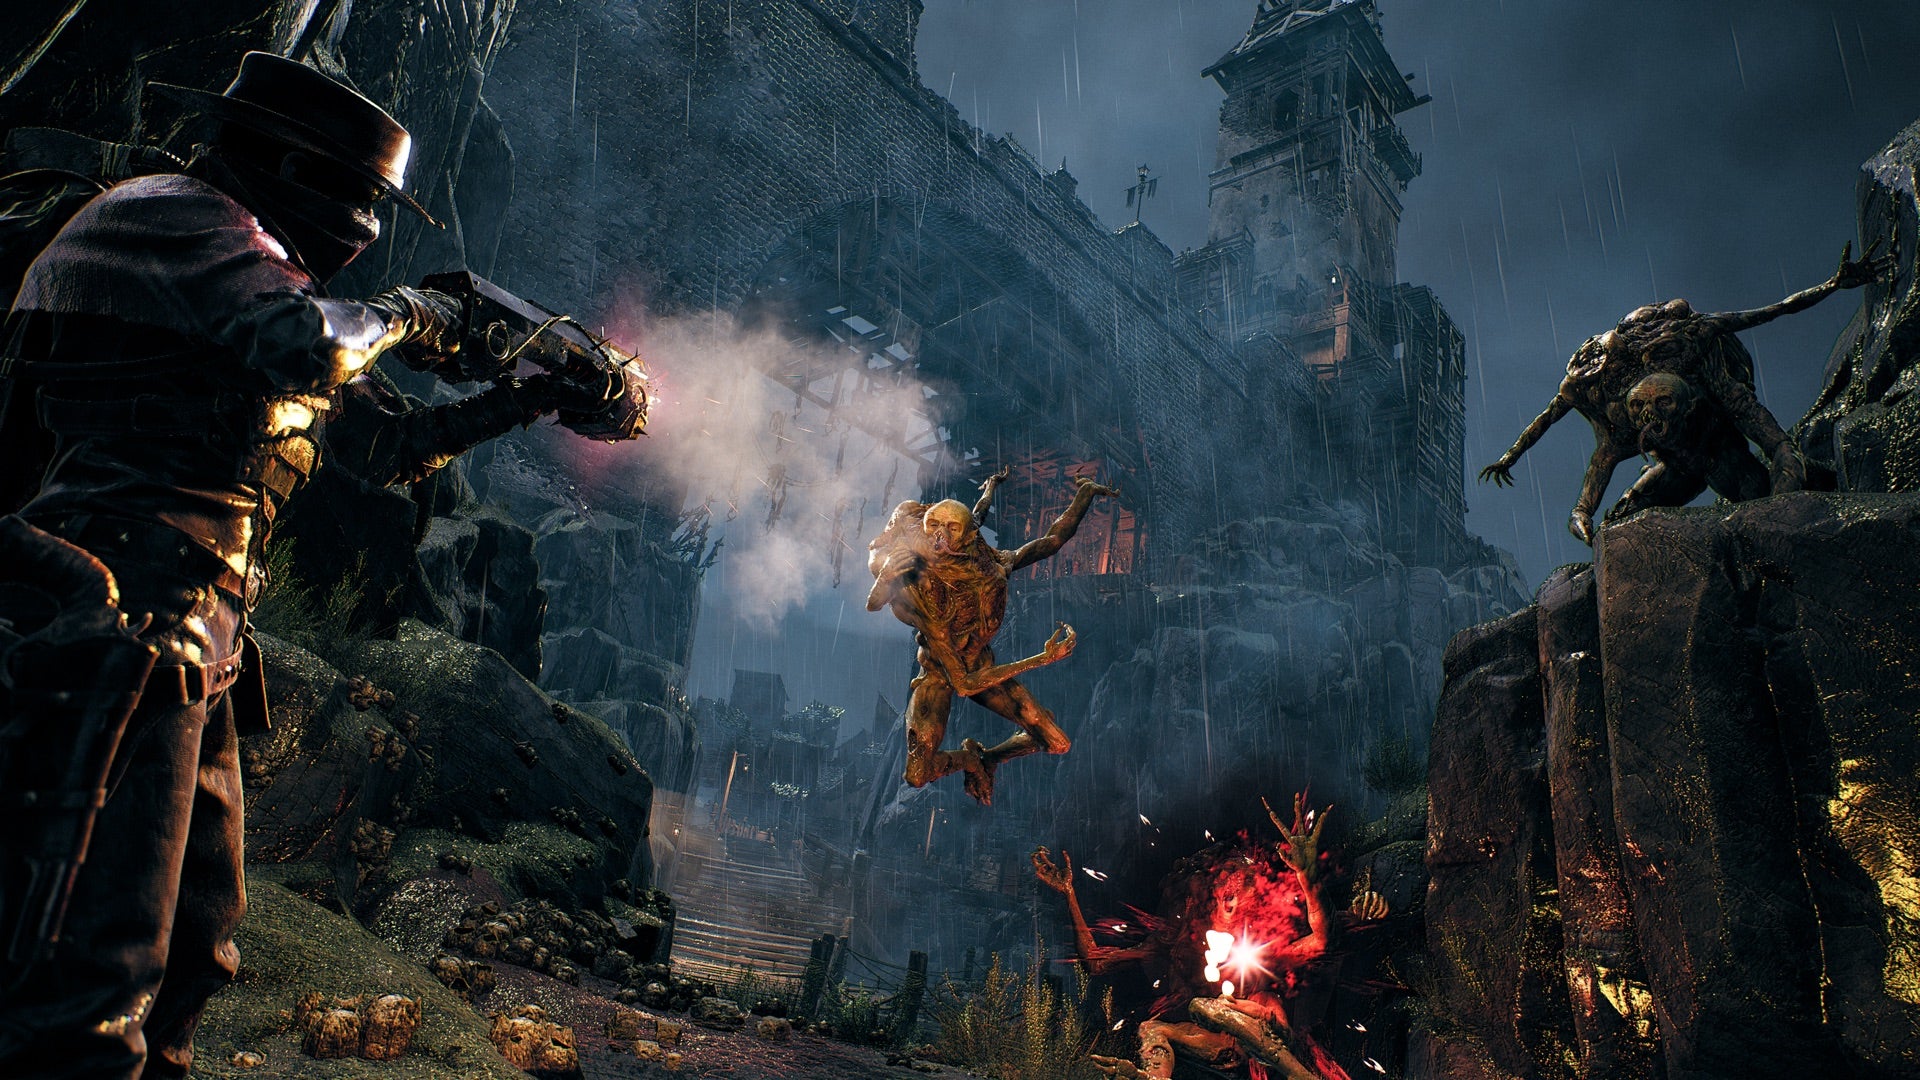 《Remnant 2》的《觉醒之王》DLC的游戏截图显示了一个玩家攻击看似两栖的敌人，而一座庄严的城堡高耸在头顶上方。